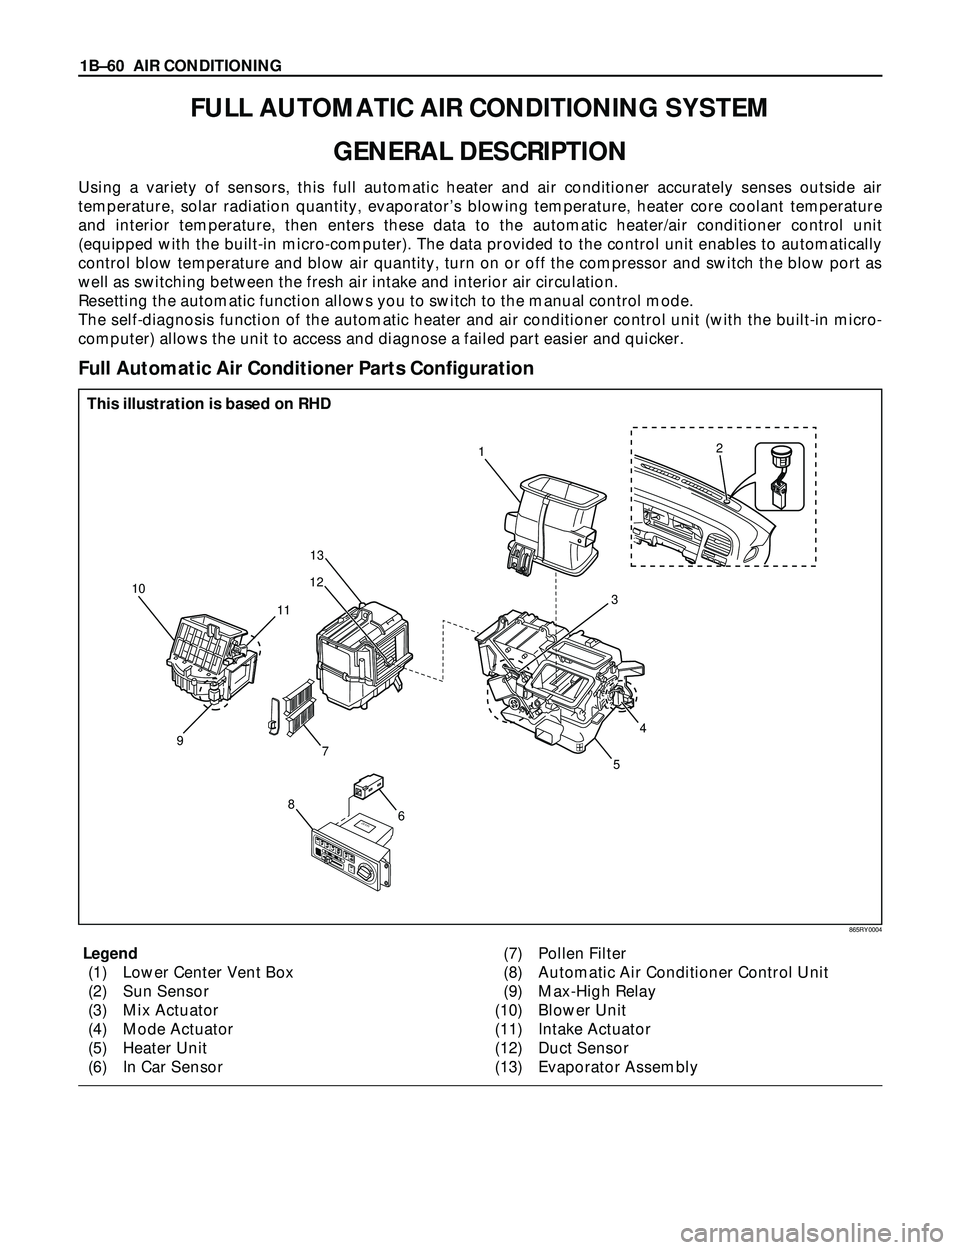 ISUZU TROOPER 1998  Service Repair Manual 1BÐ60 AIR CONDITIONING
�
�
��������
�
��������
�
�;�&�9�&�-
�"�6�5�0
�"��$�0
�
��"�6�5�0�-�0�)
�*
1
13
10
9
7
6
5
8 11122
4 3
FULL AUTOMATIC AIR CONDITIONING SYSTEM
GENERAL DES